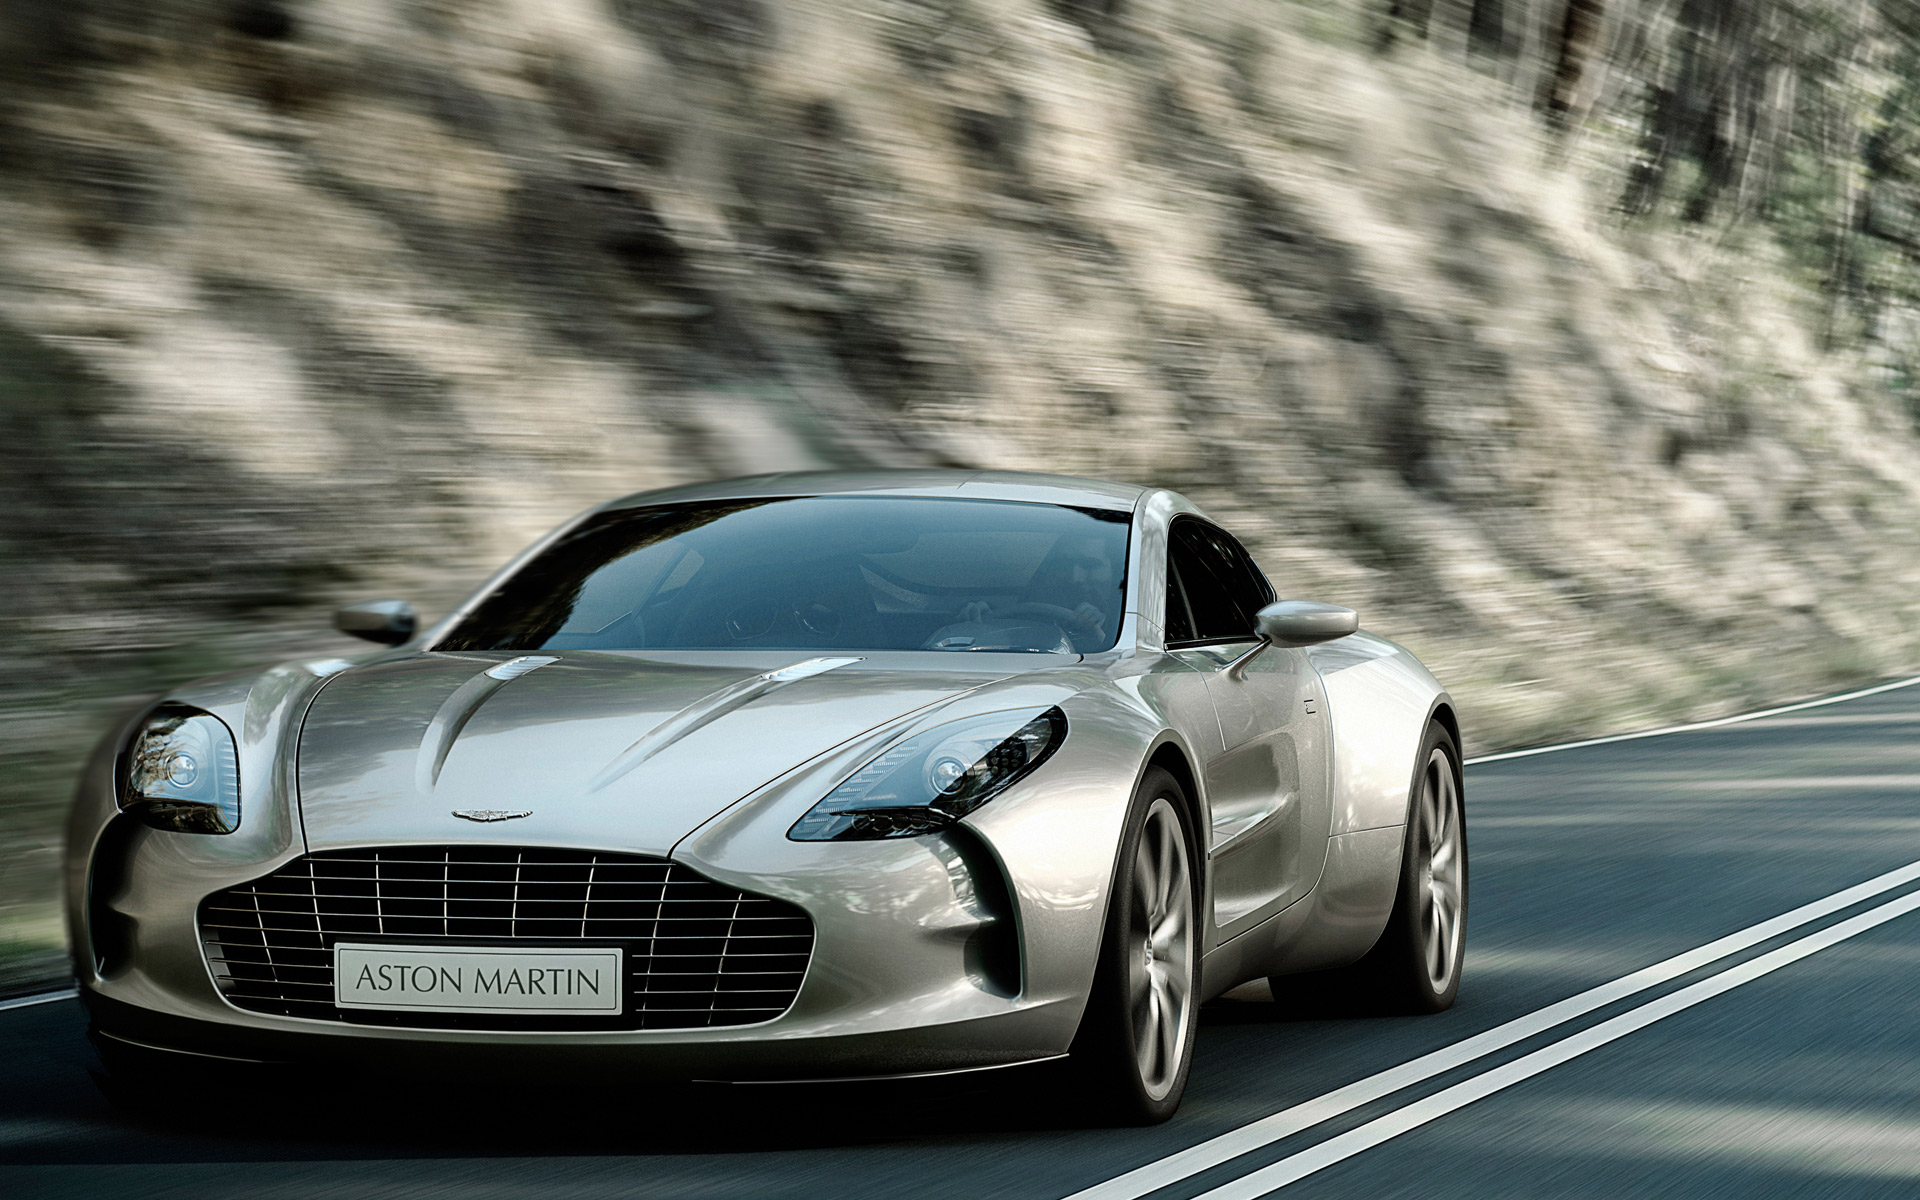 Why choose Service My Car for an Aston Martin car service in Dubai